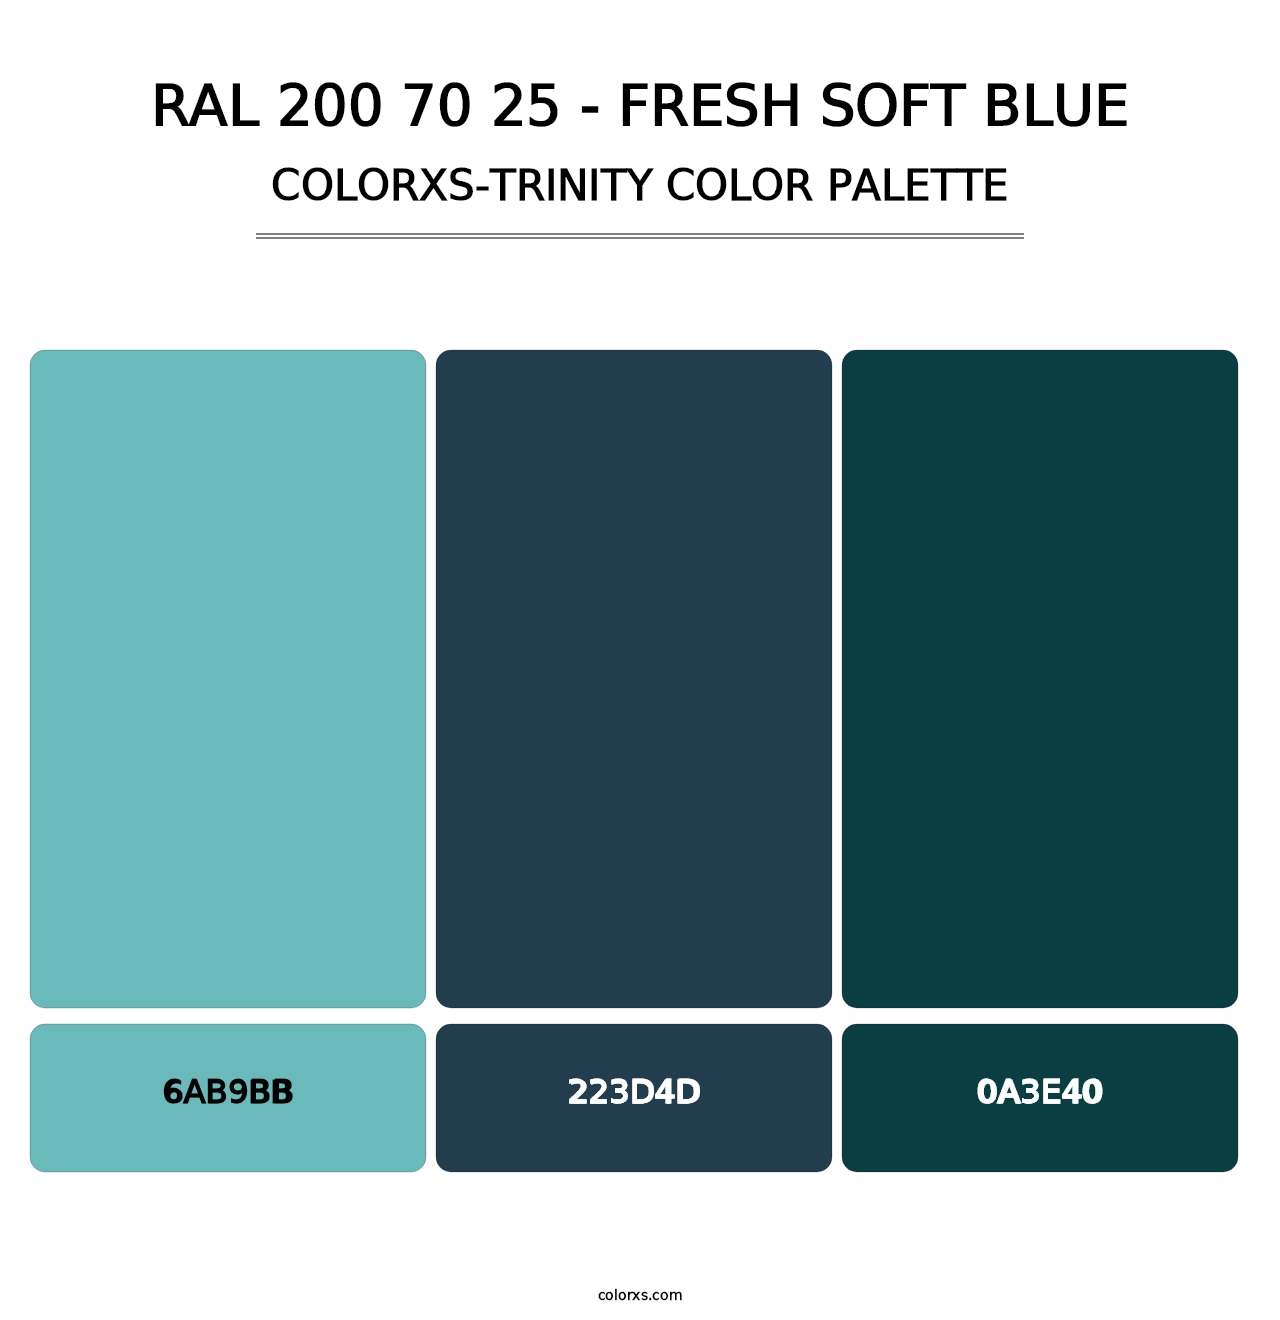 RAL 200 70 25 - Fresh Soft Blue - Colorxs Trinity Palette